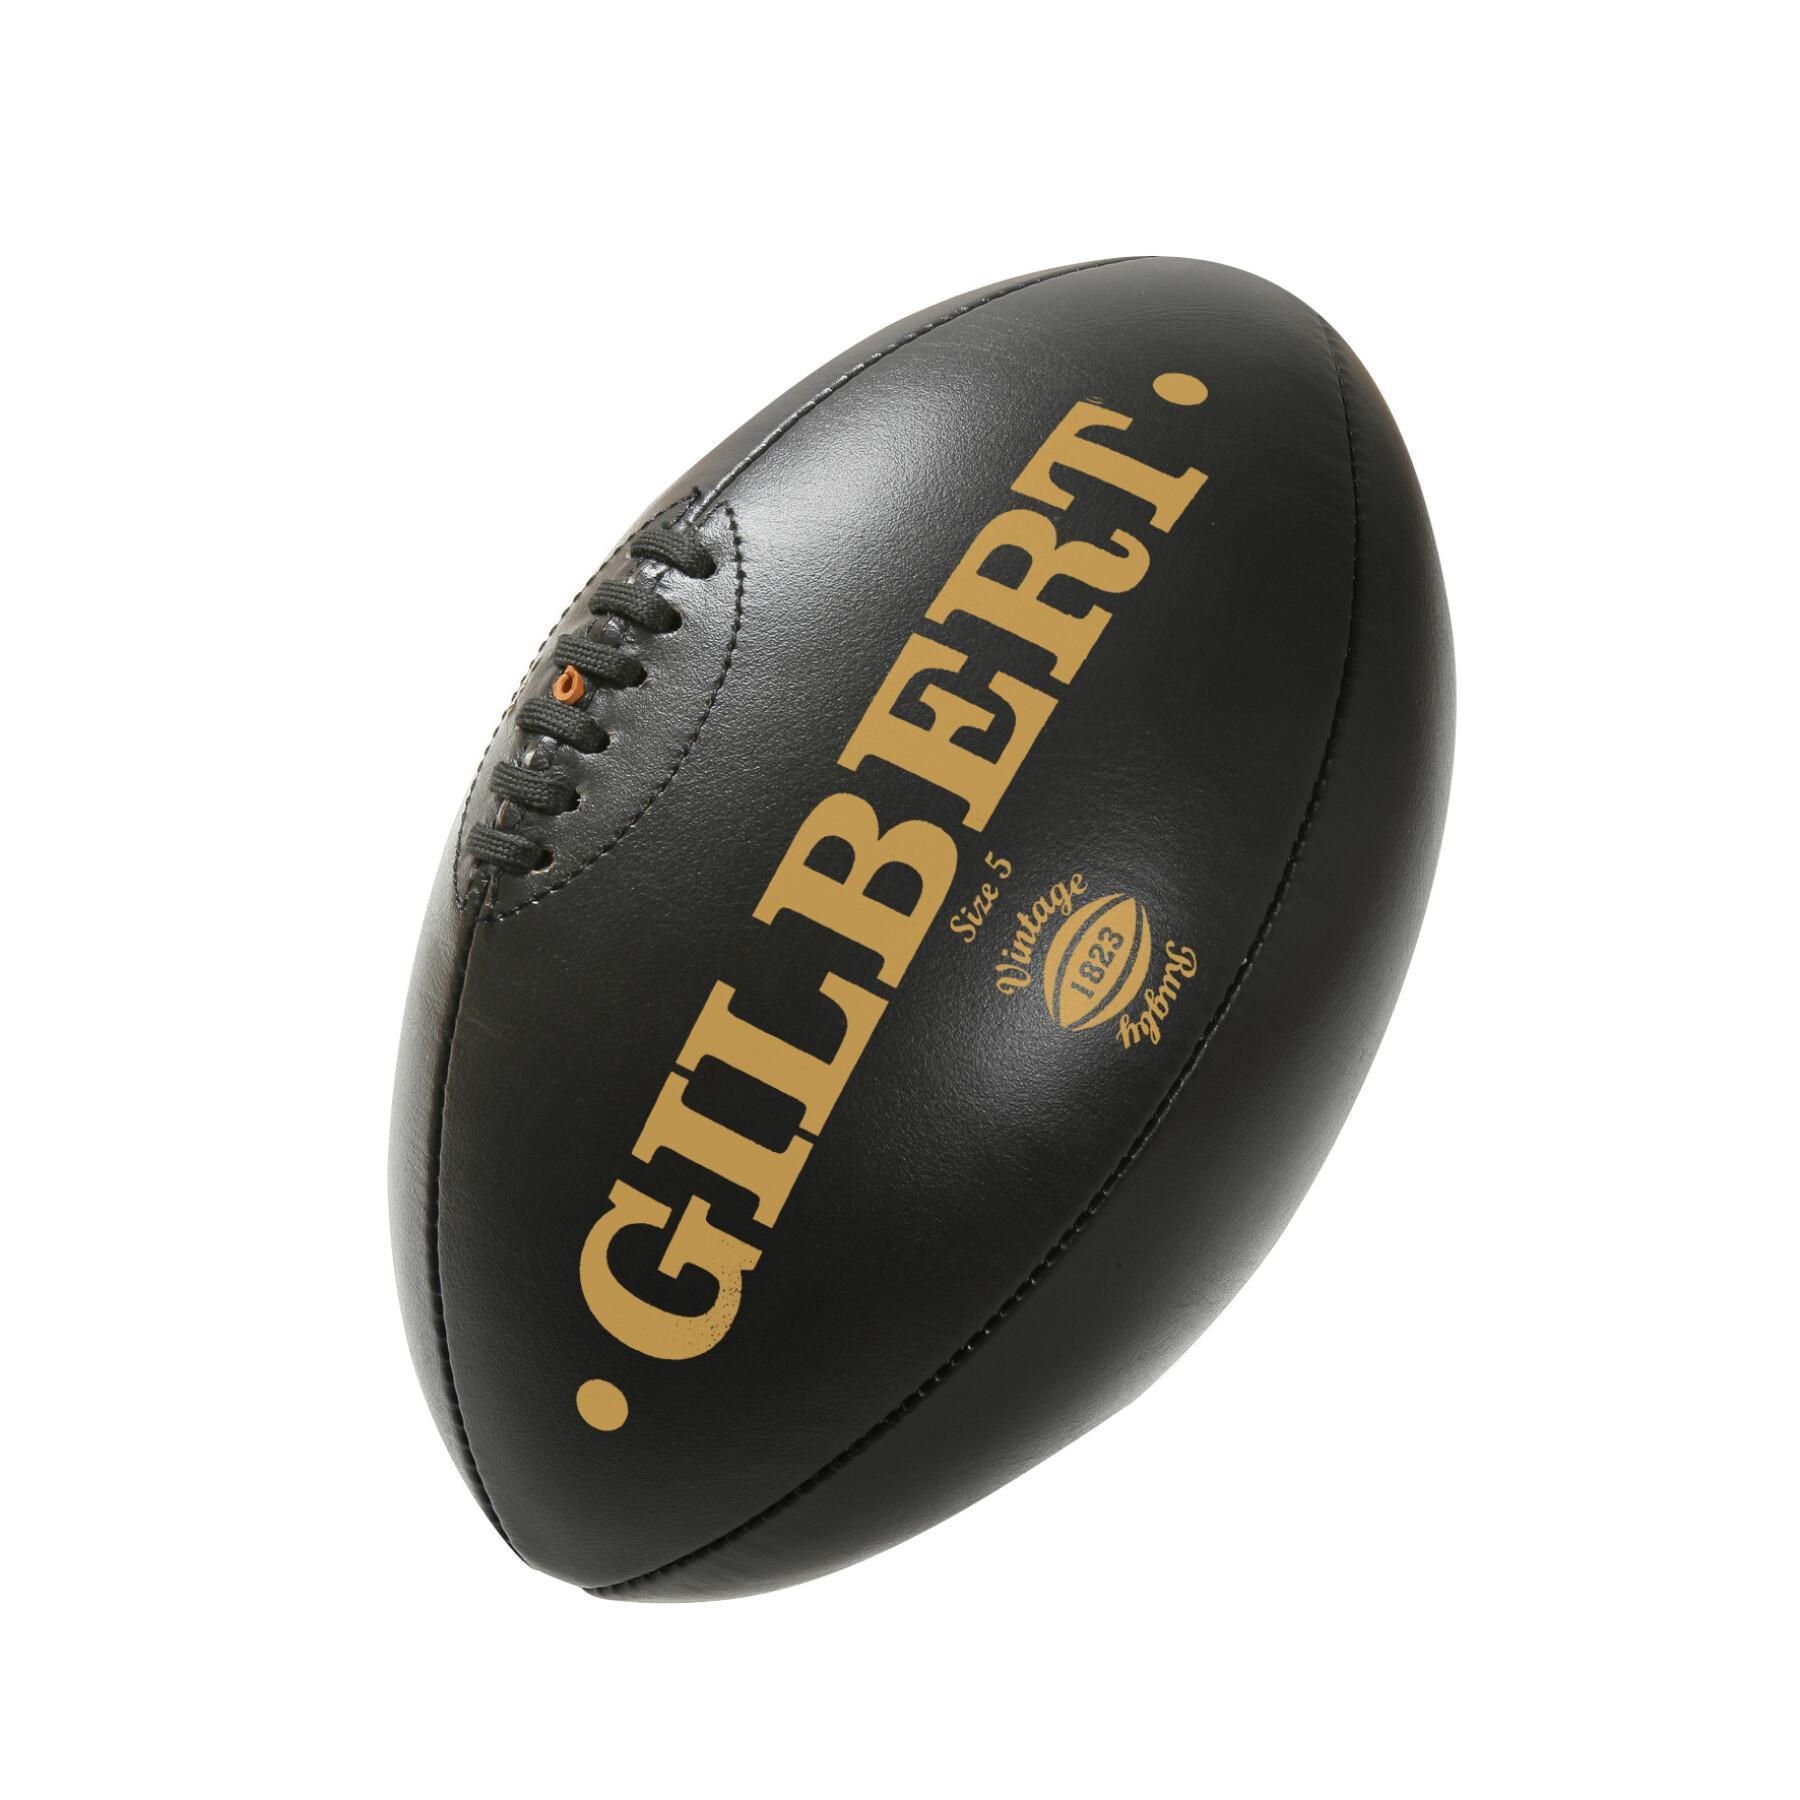 Mini bola de râguebi Gilbert Héritage (taille 1)